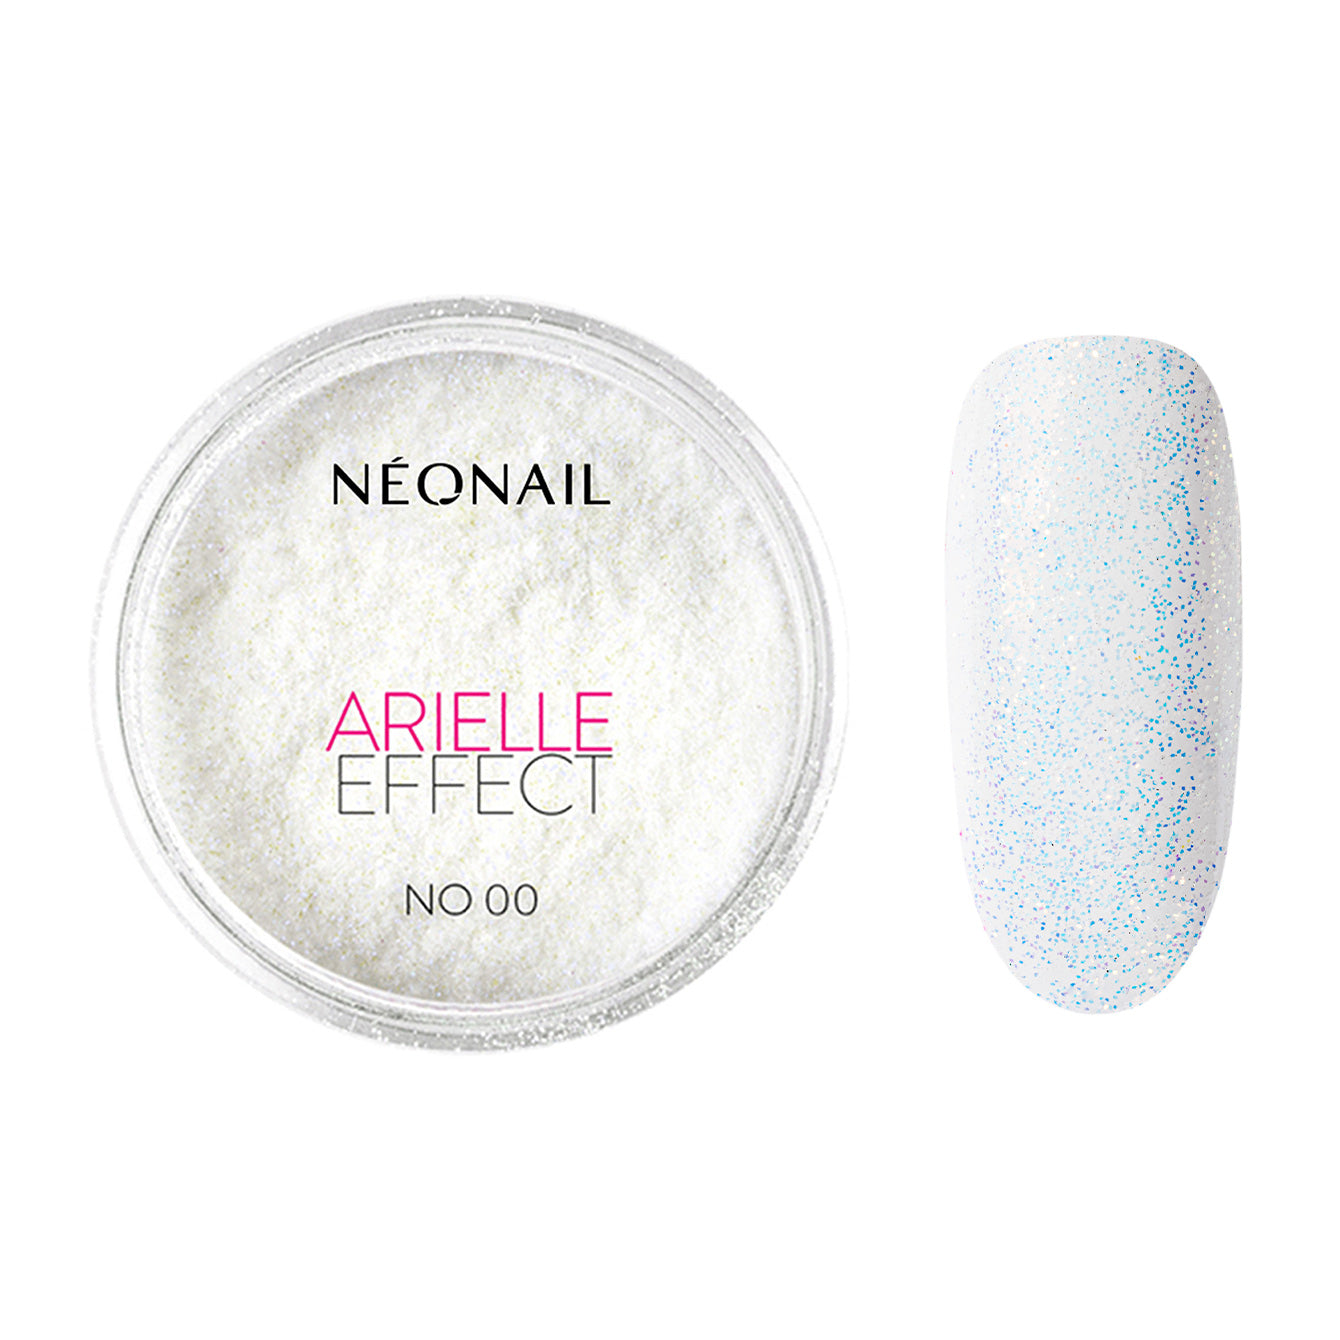 Neglepynt - Arielle Effect Classic No 00 - 2g-NeoNail-NR Kosmetik